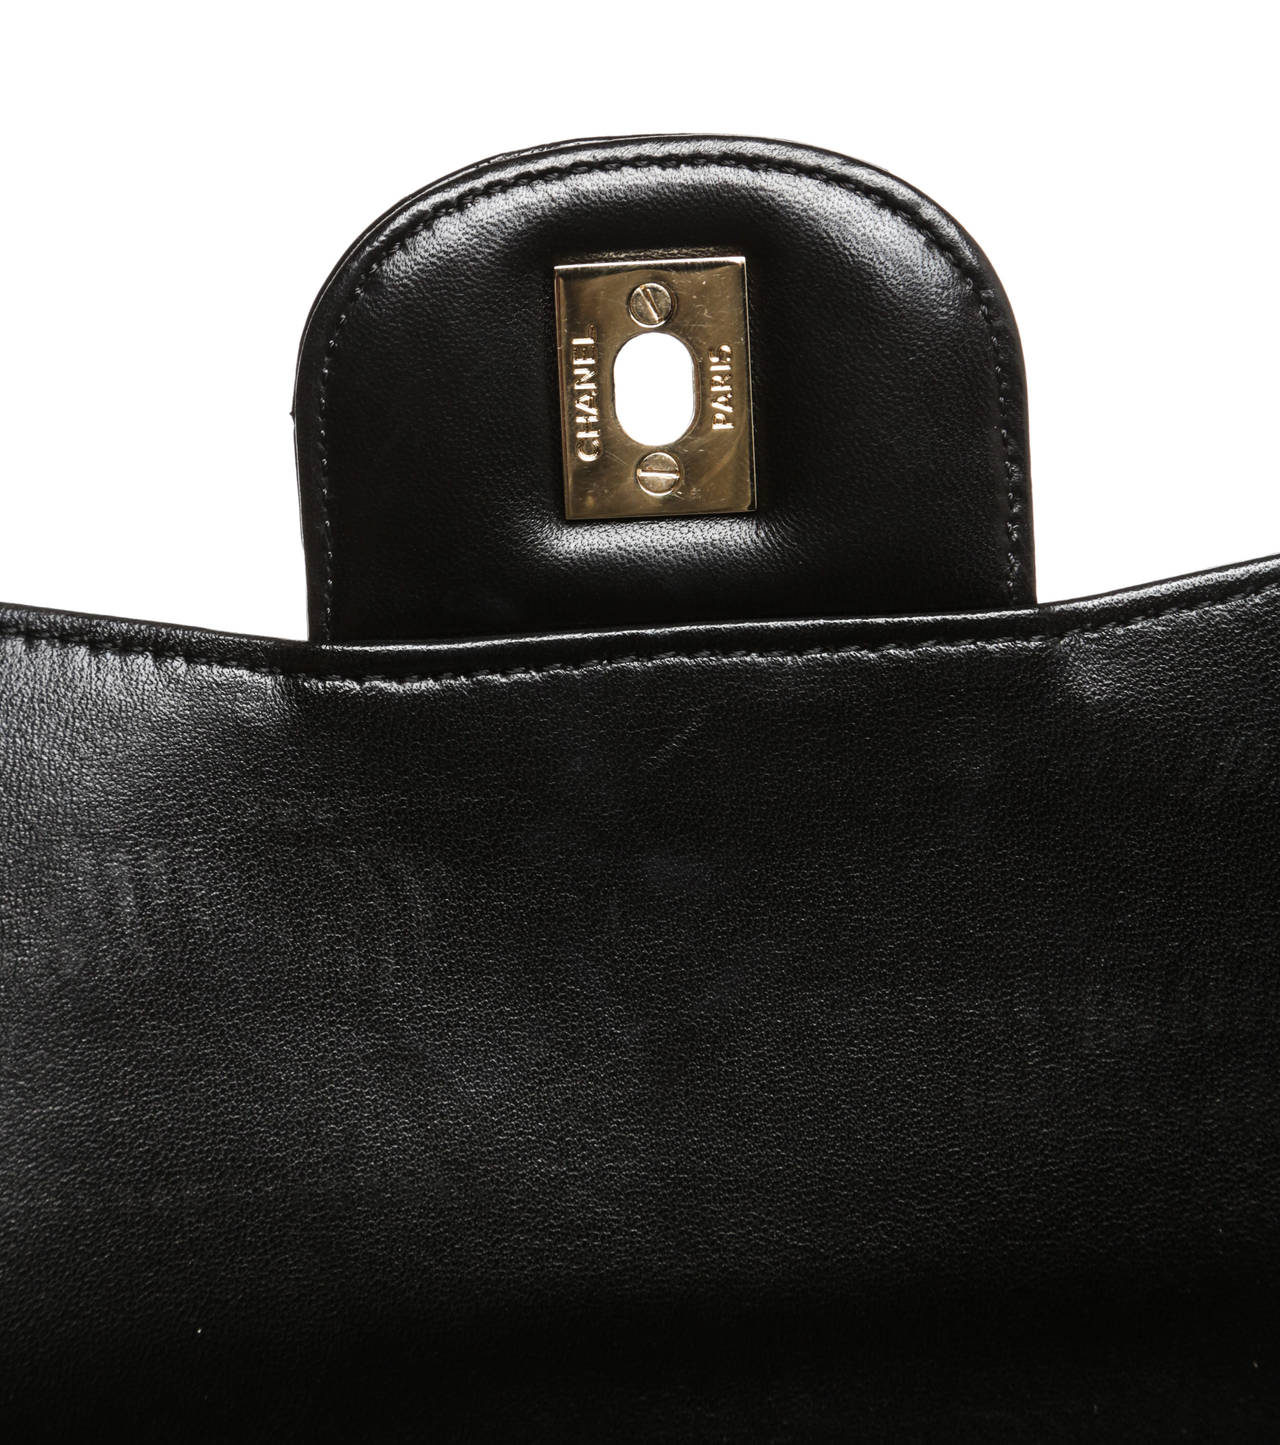 Chanel Black Alligator Classic 2.55 Jumbo Handbag SHW 4